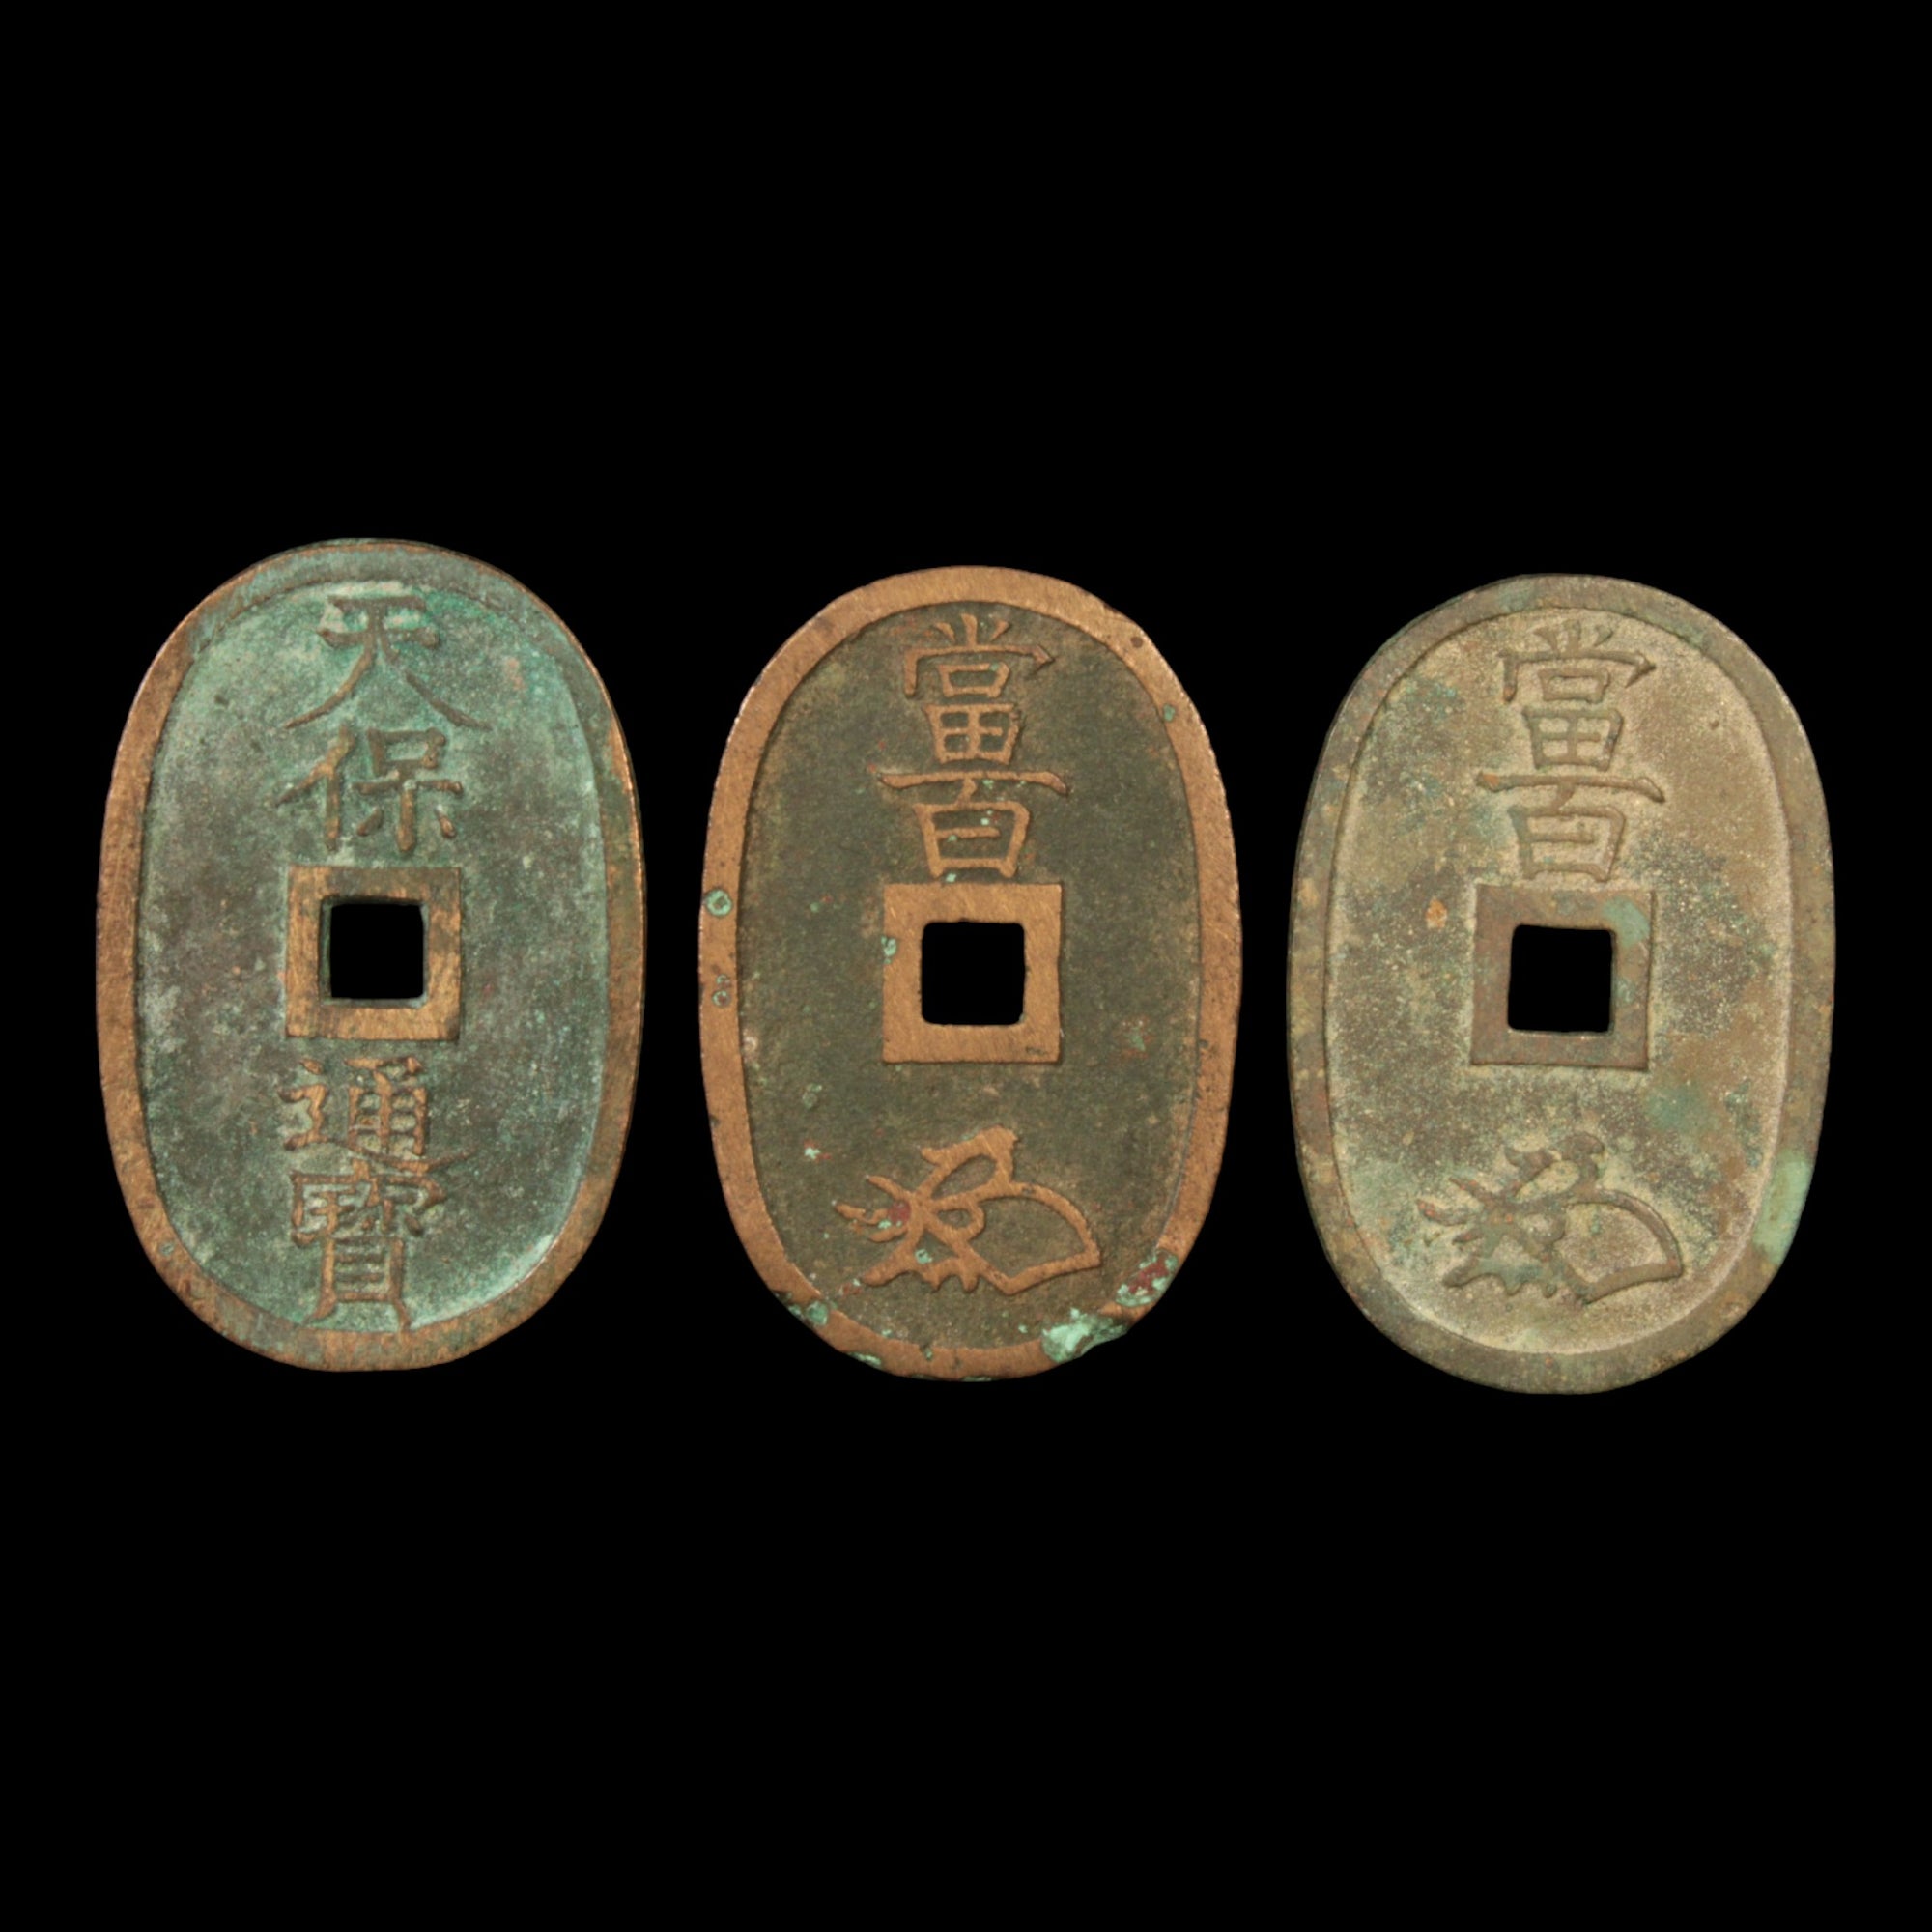 Lot of 3: Japan, Tenpo Tsuho (100 mon), Low Grade - c. 1860 - Edo Period